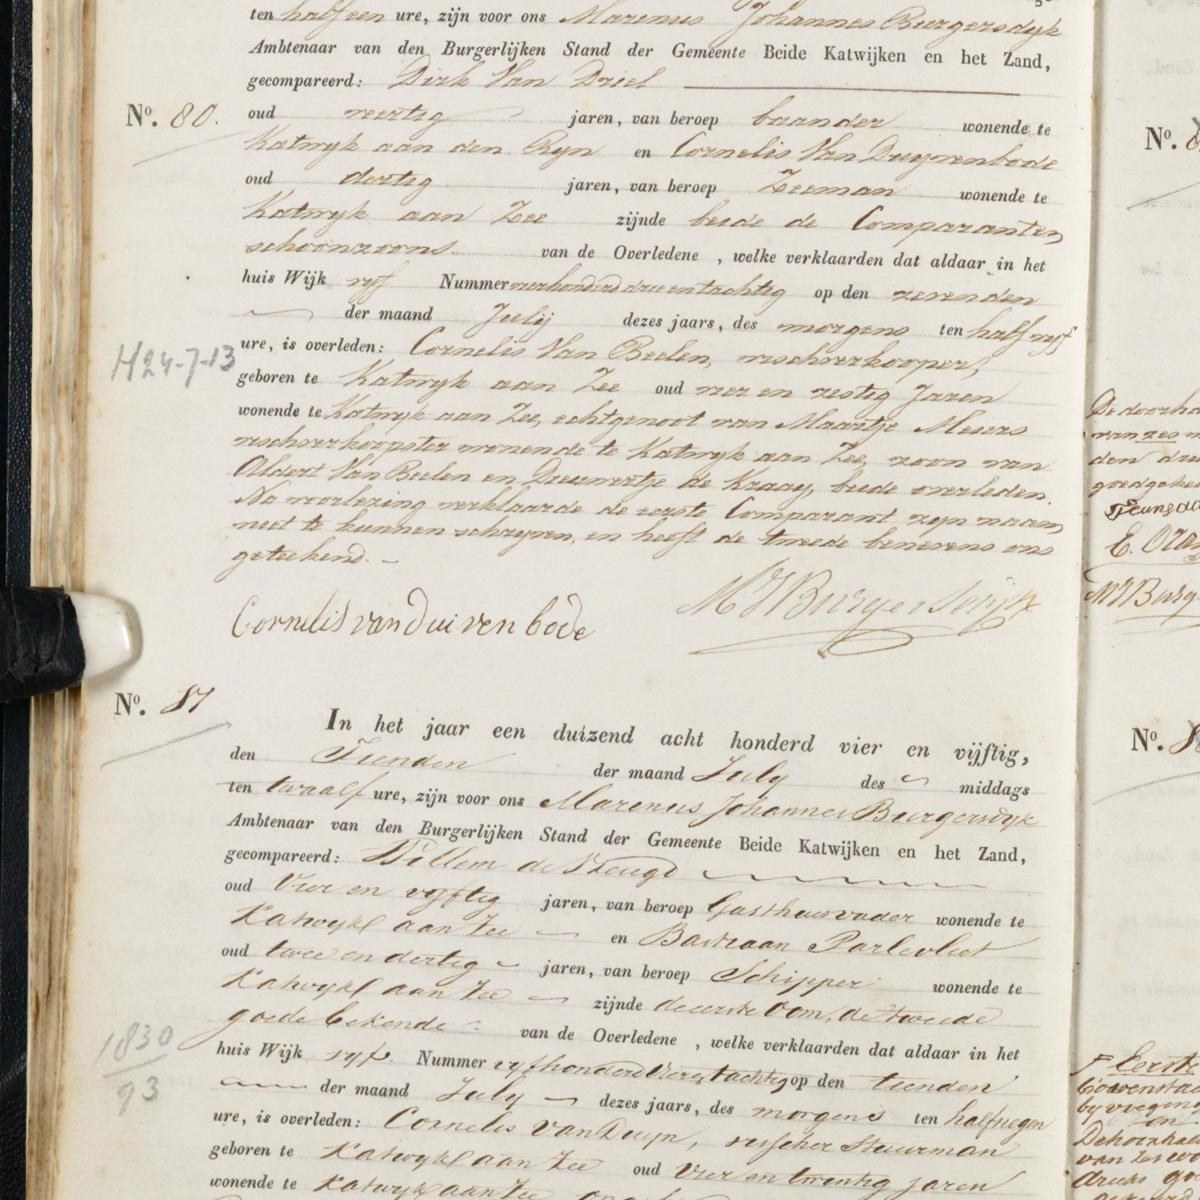 Civil registry of deaths, Katwijk, 1854, records 80-81